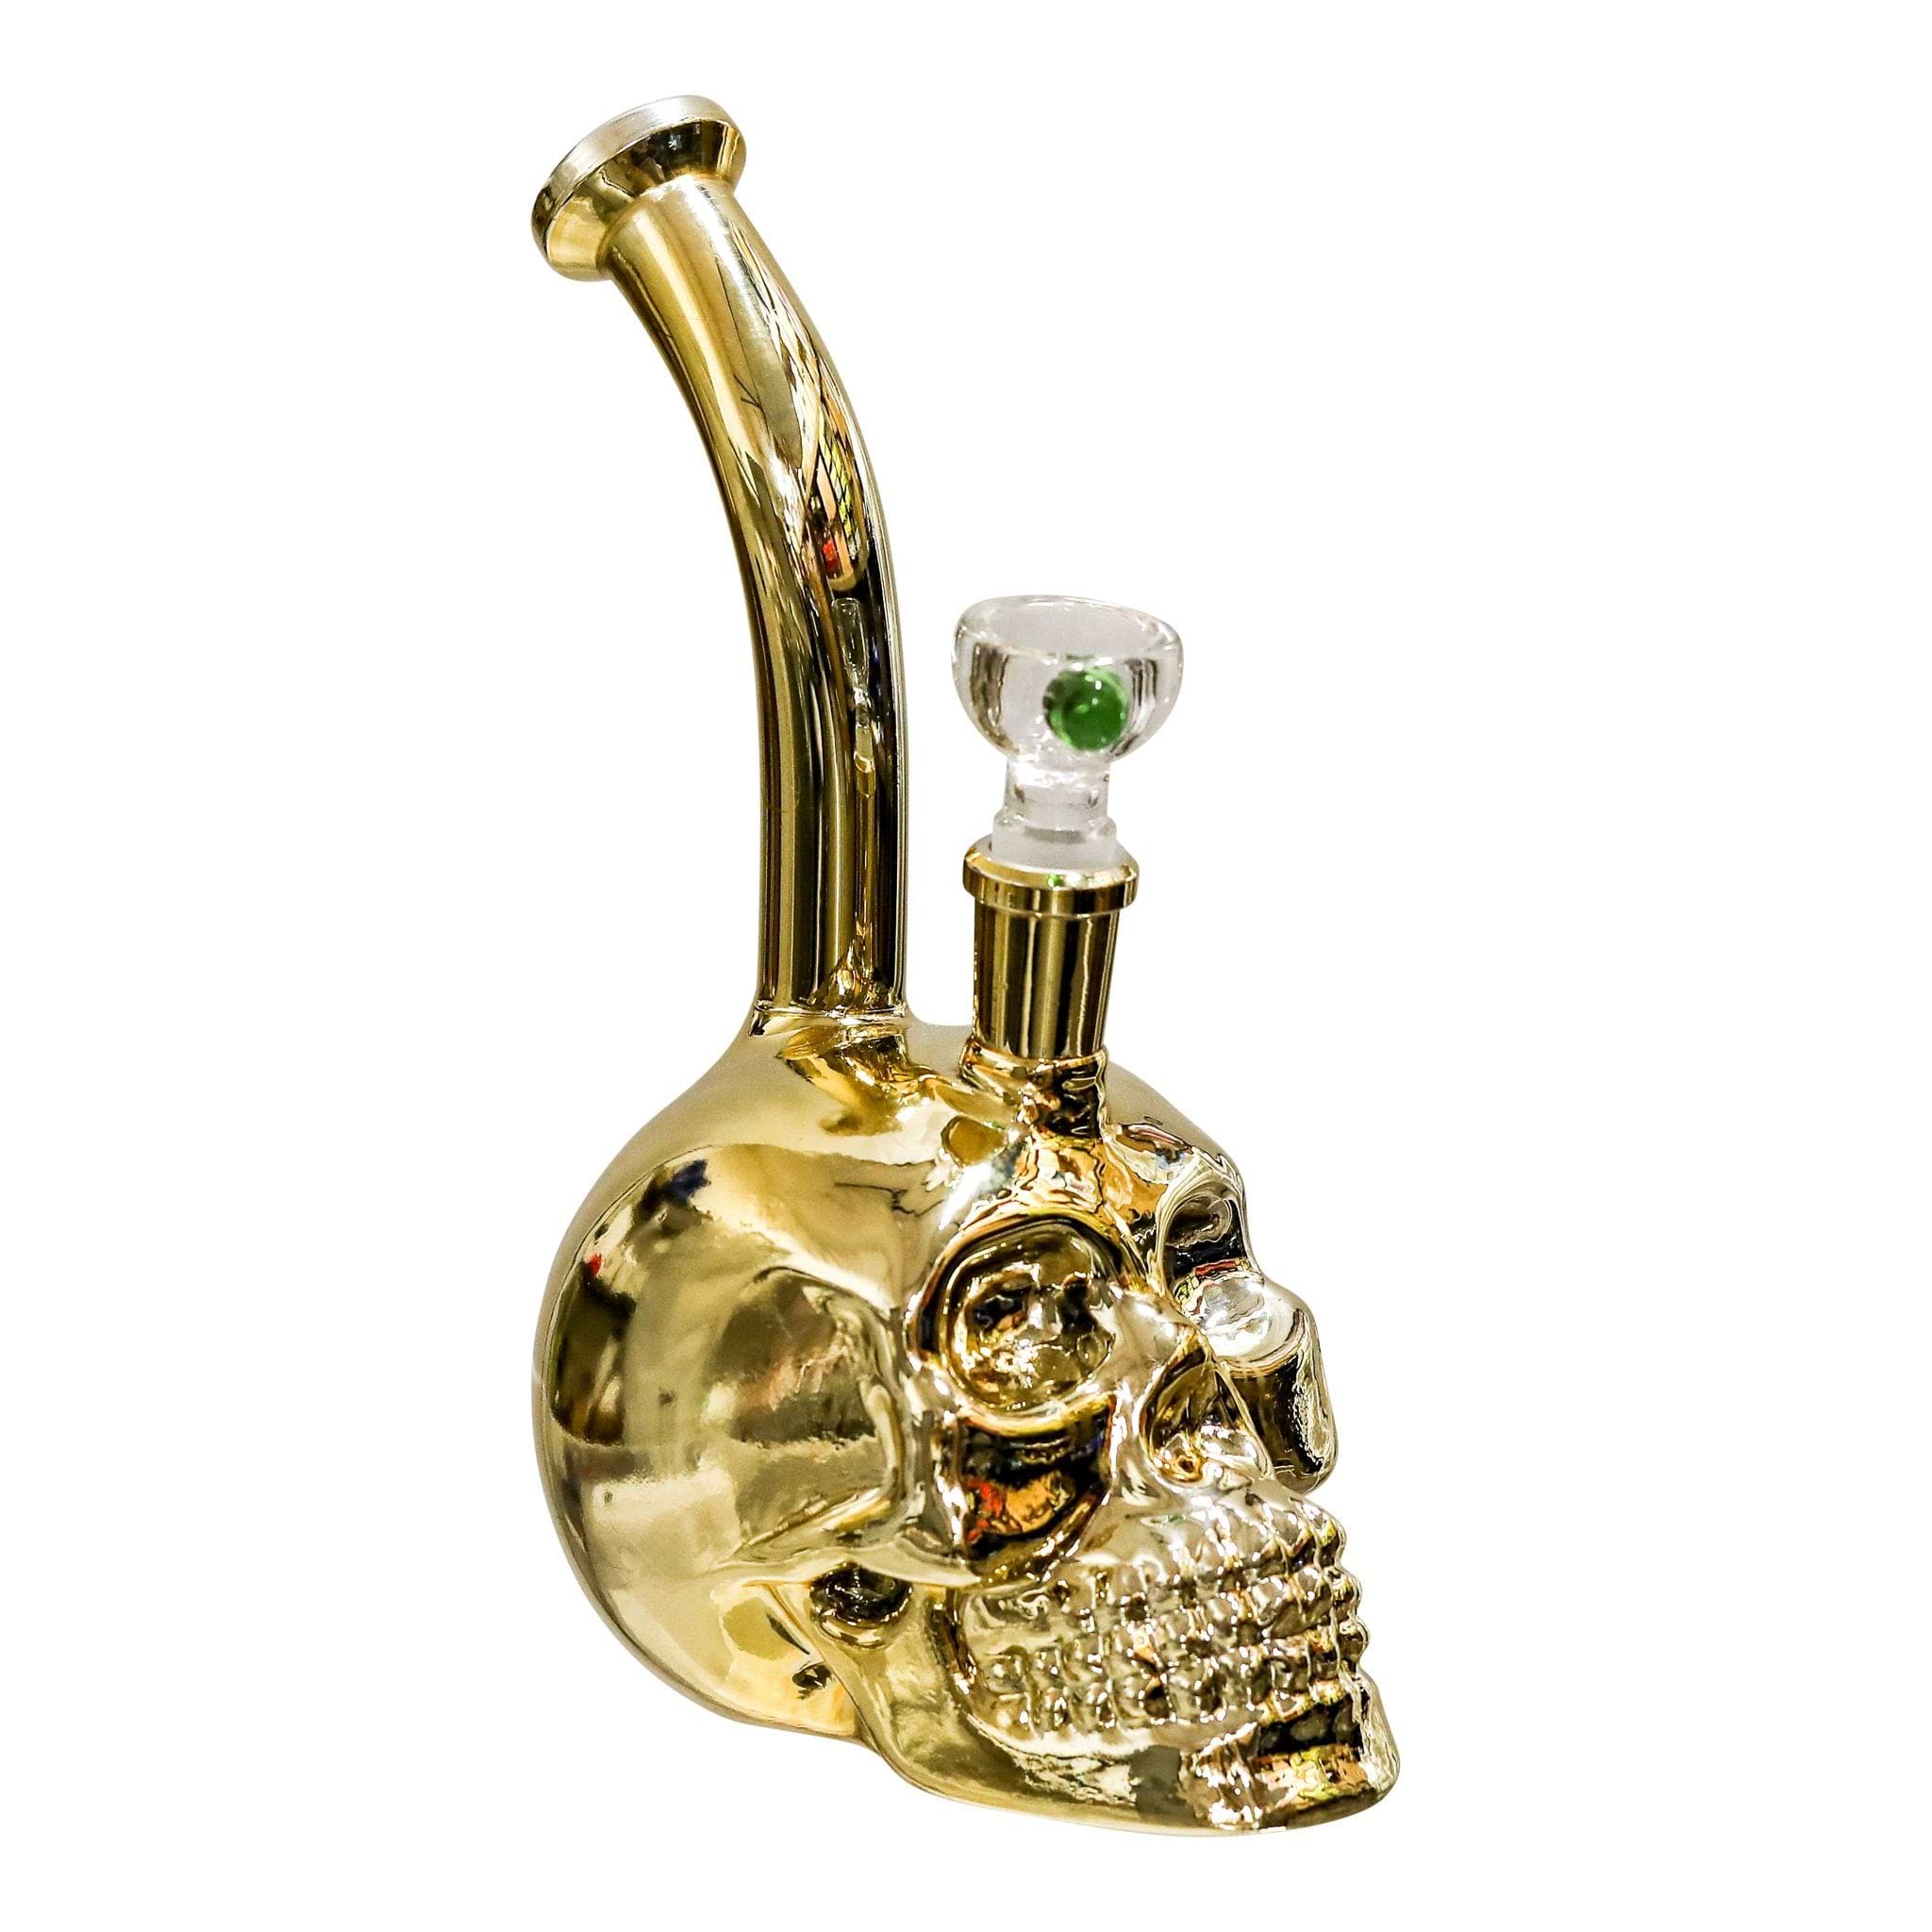 Skull Glass Dabber Wand $11.99 FREE SHIPPING – TWB